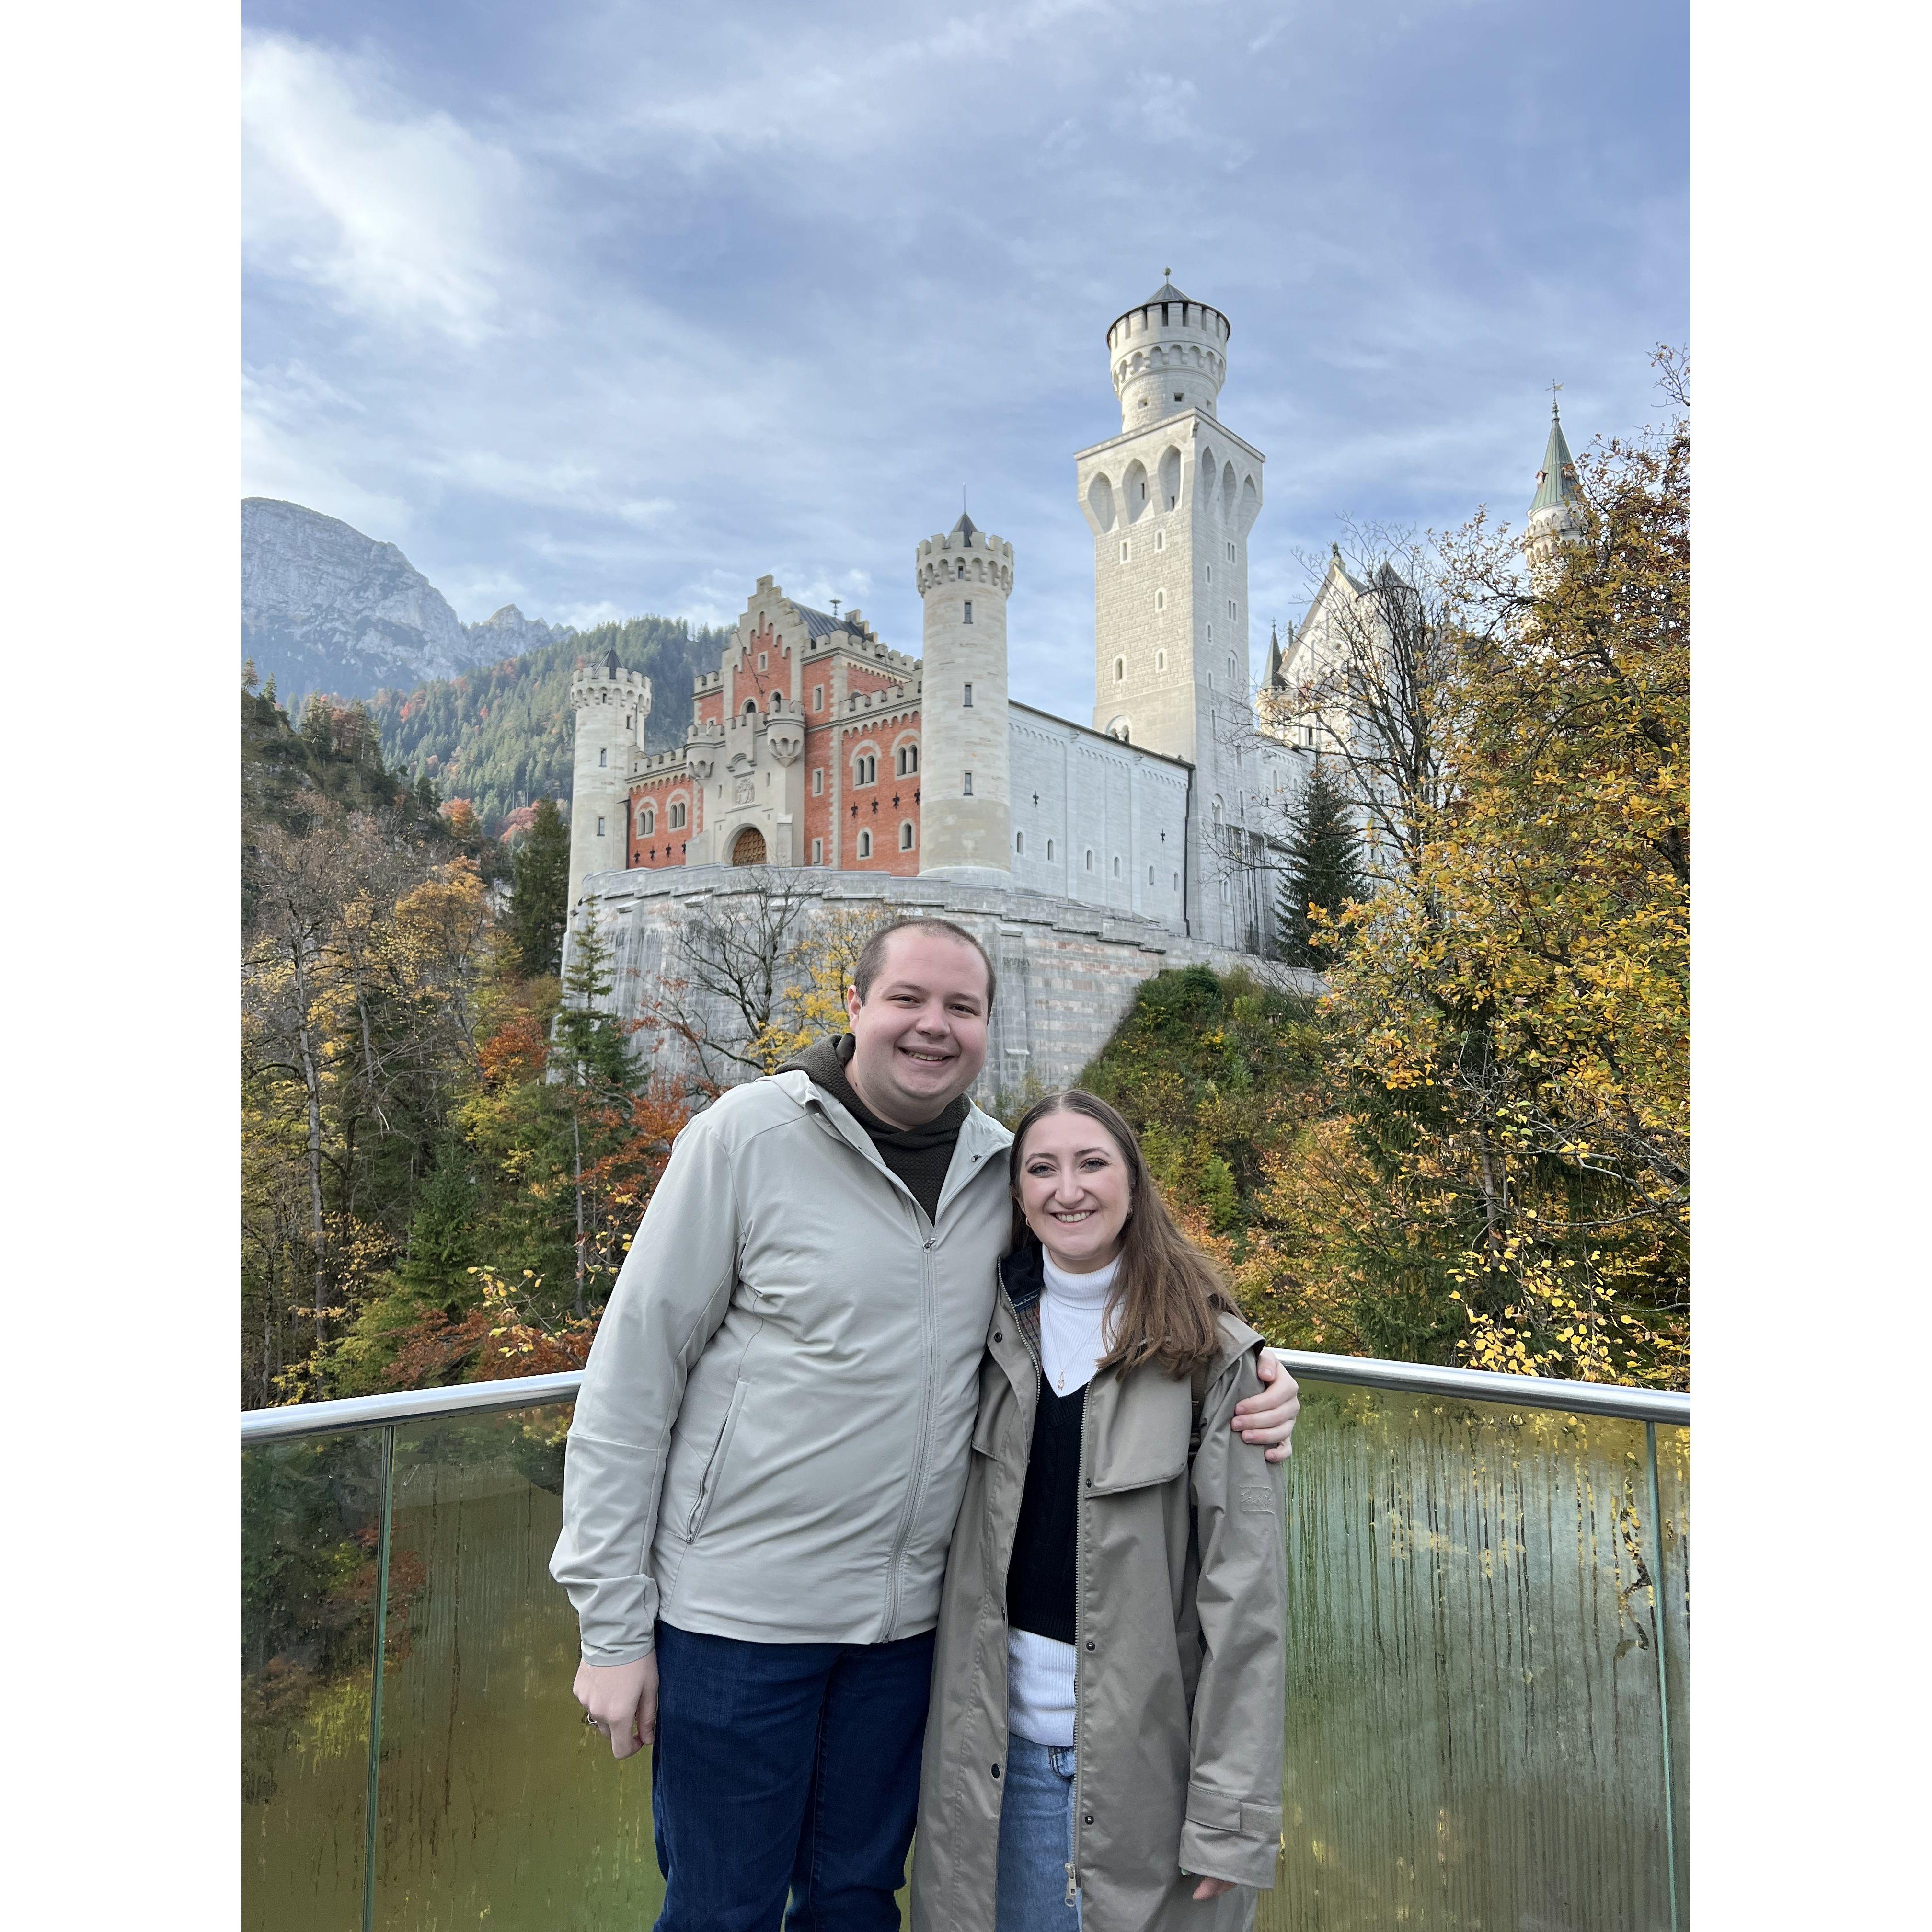 Matt and I in front of Neuschwanstein Castle in Germany.